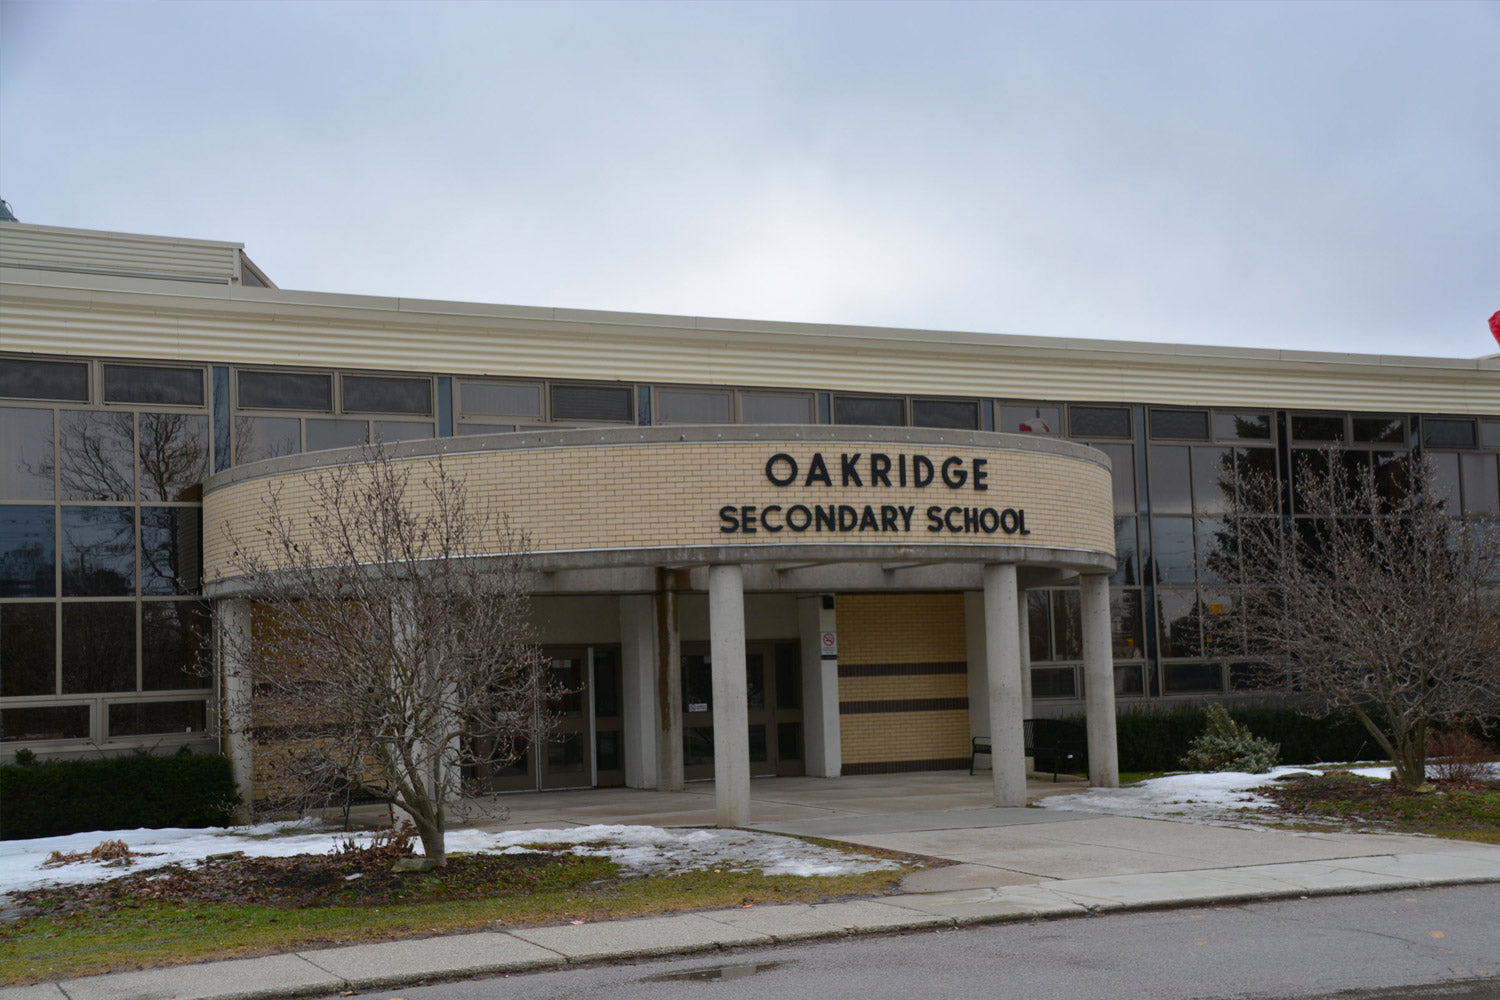 Oakridge Secondary School